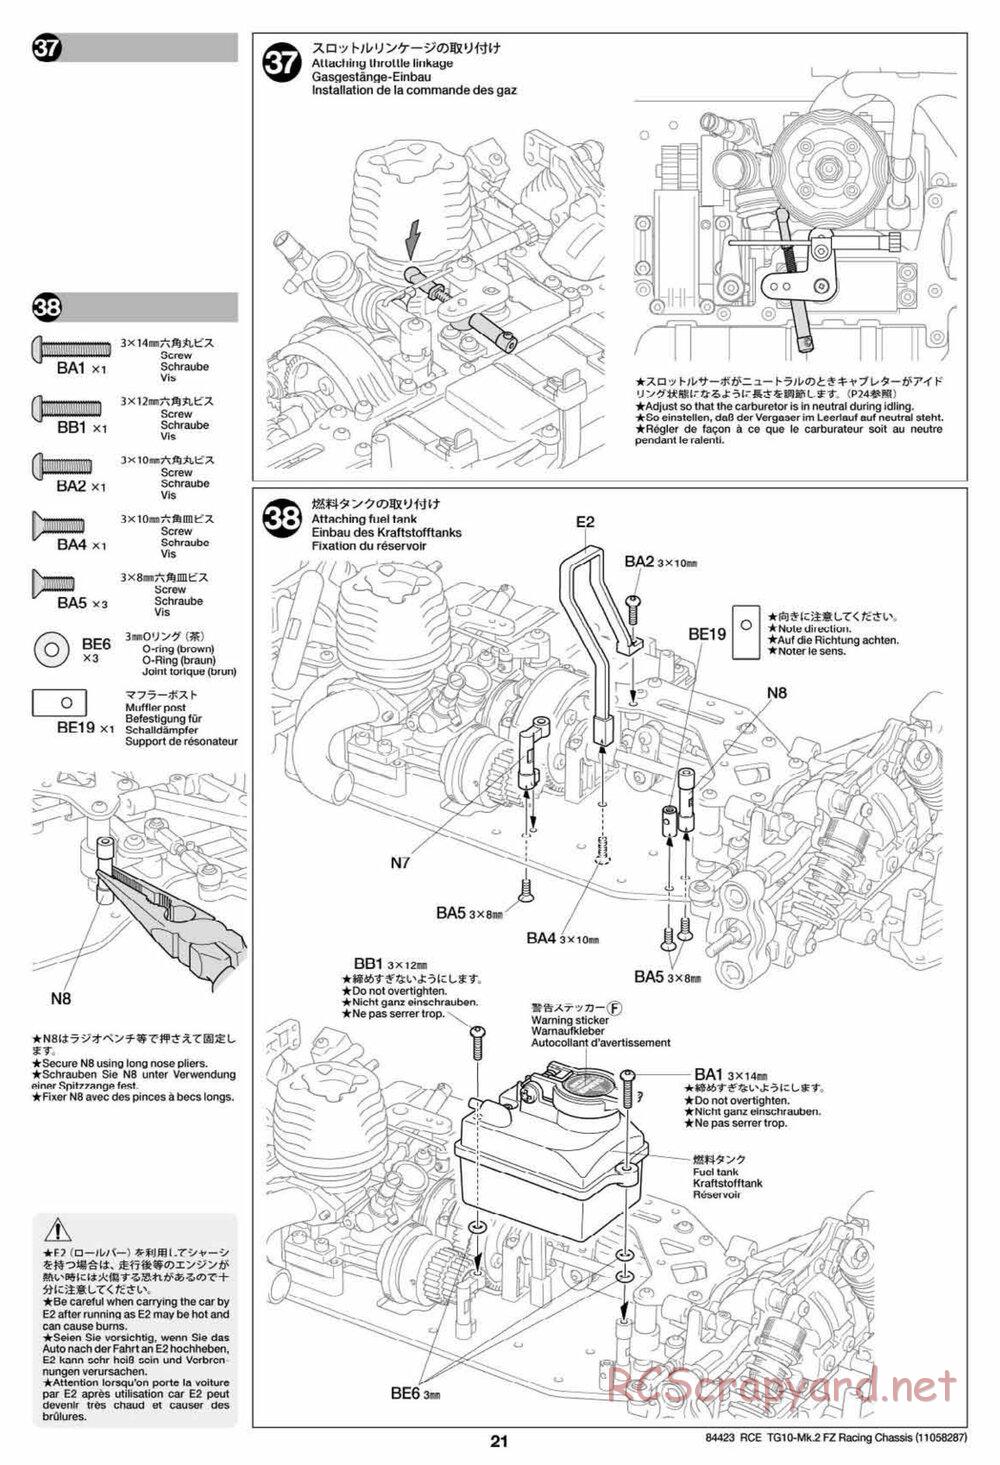 Tamiya - TG10 Mk.2 FZ Racing Chassis - Manual - Page 21